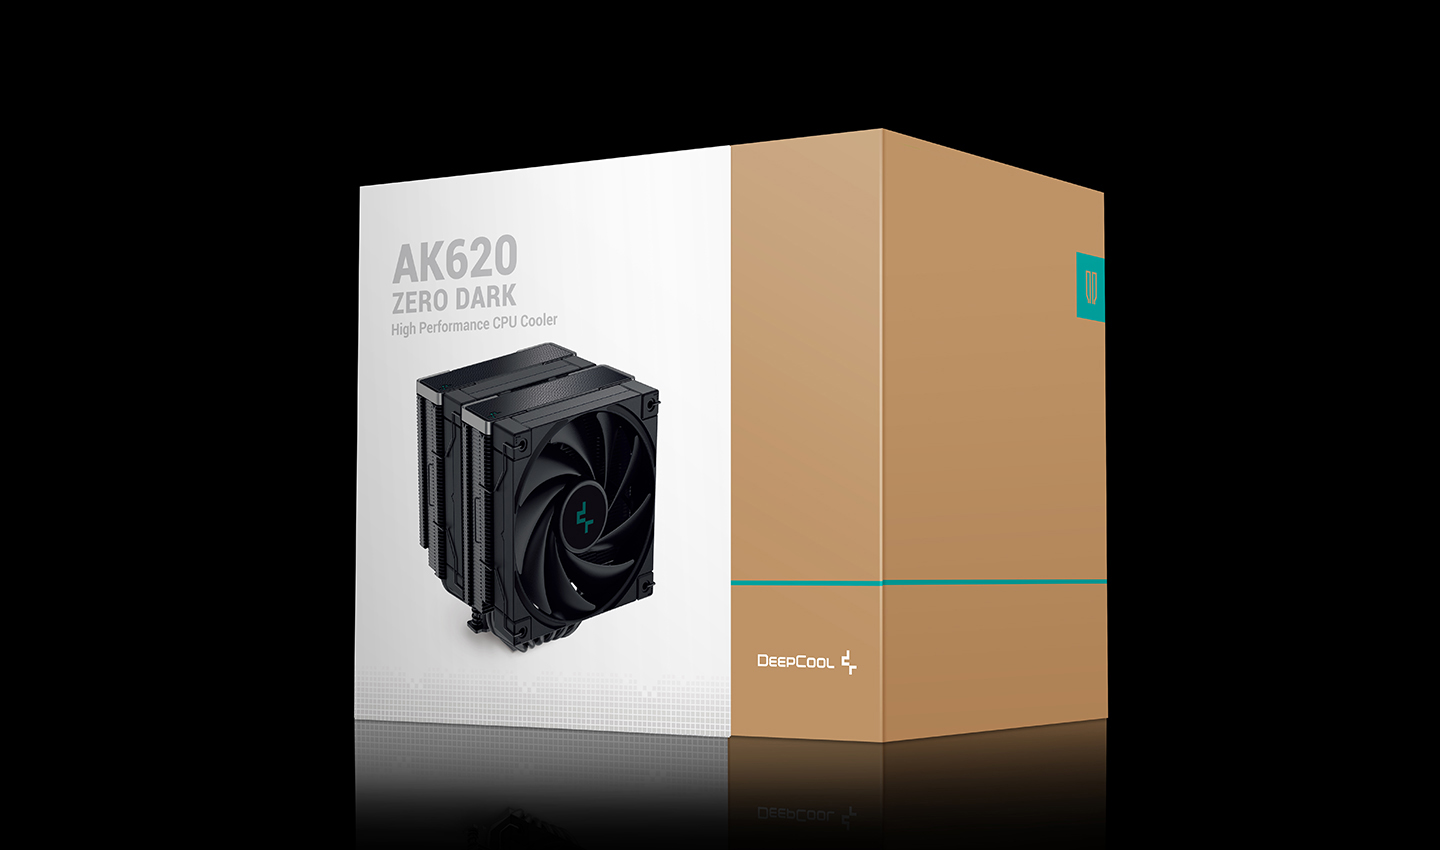 DeepCool AK620 in test: An affordable high-performance air cooler